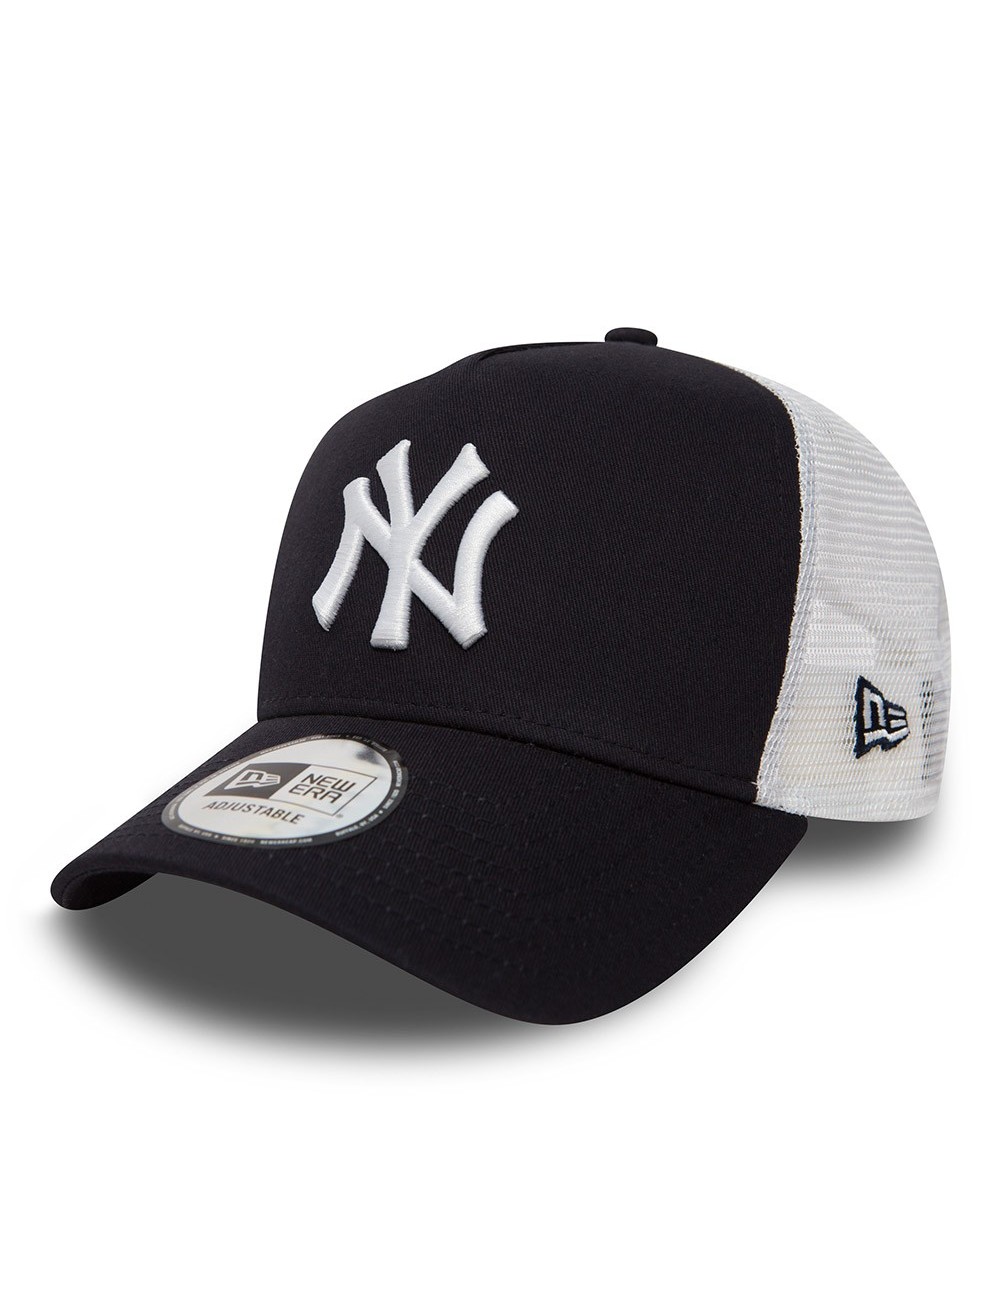 NEW ERA NEW YORK YANKEES A-FRAME CAP